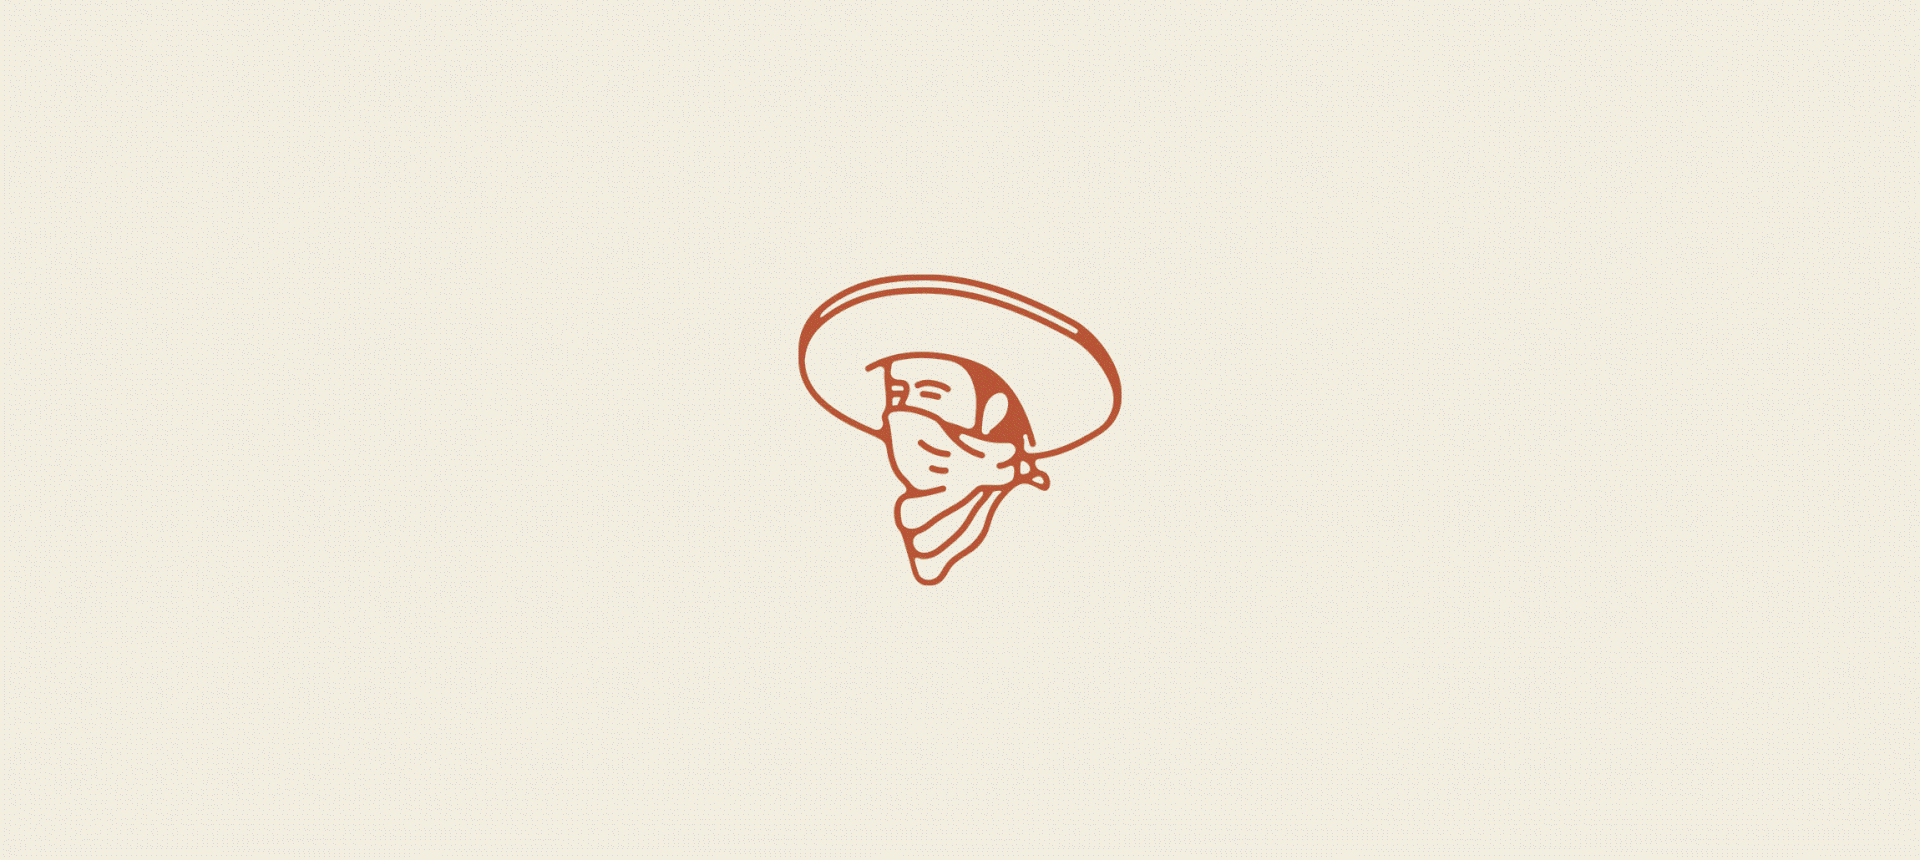 Malverde Visual Identity badge design bandit branding desert illustration logo pomade t shirt design typography vintage western